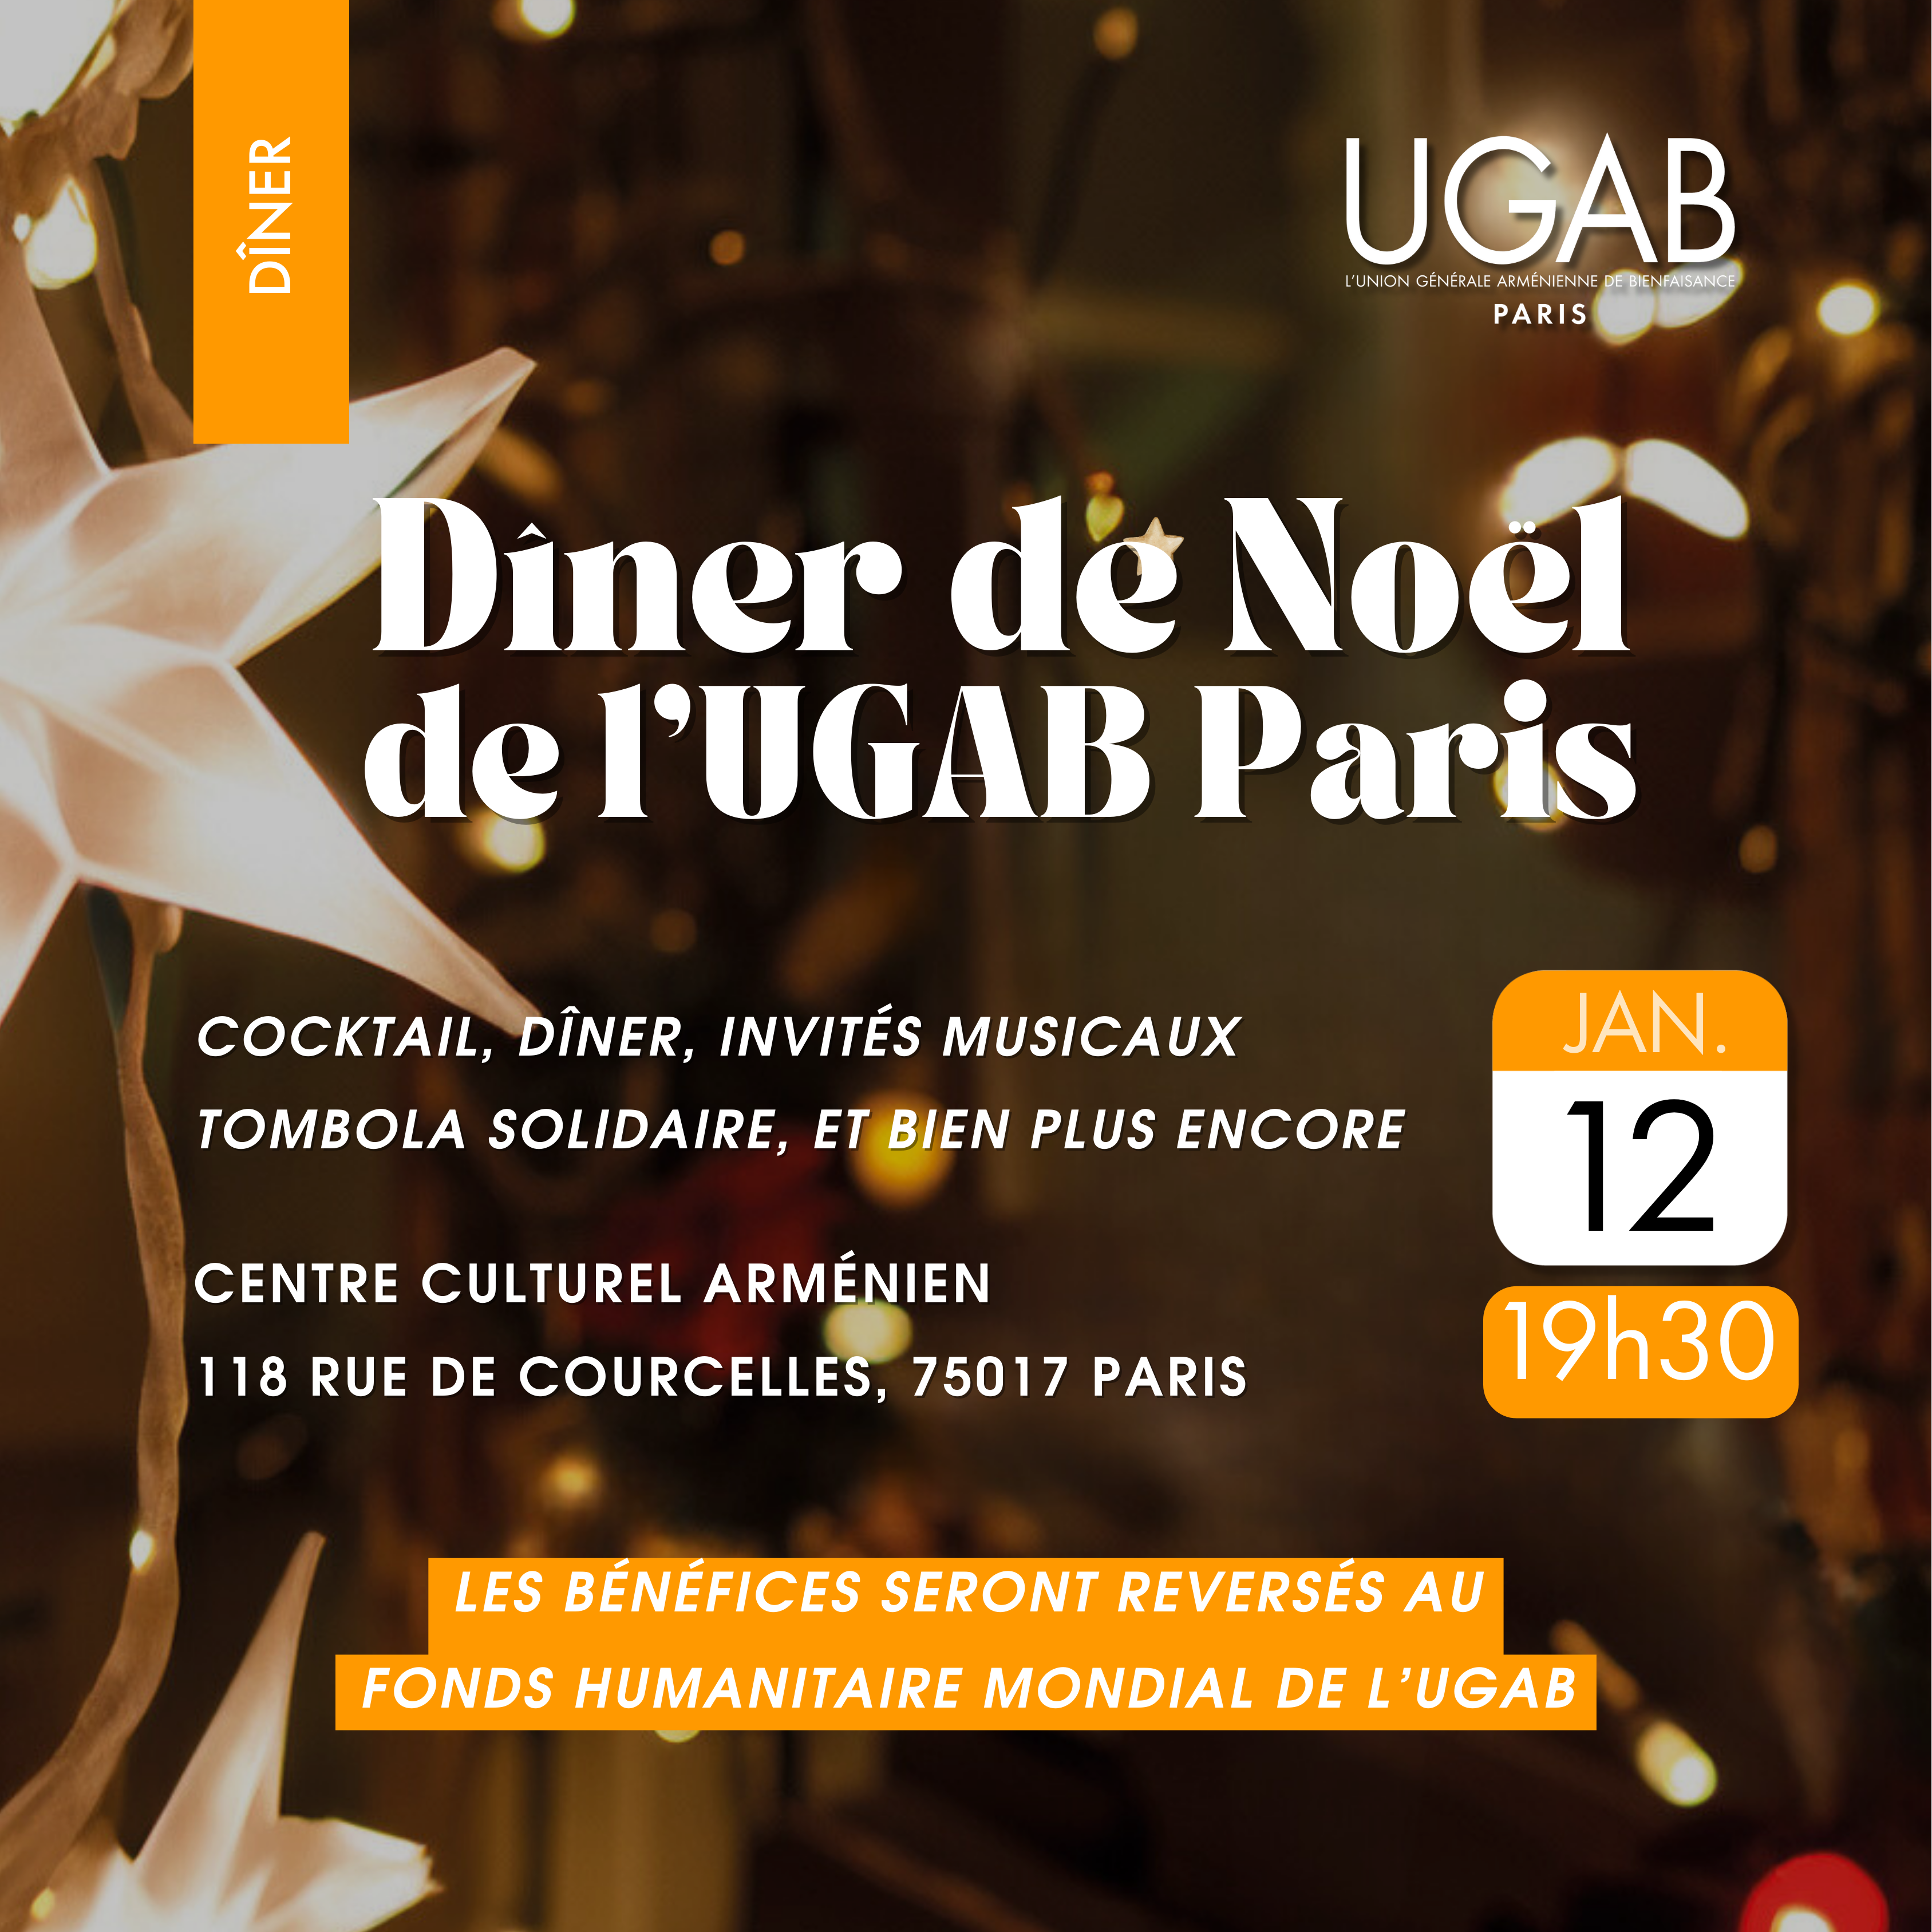 Dîner de Noël de l'UGAB Paris